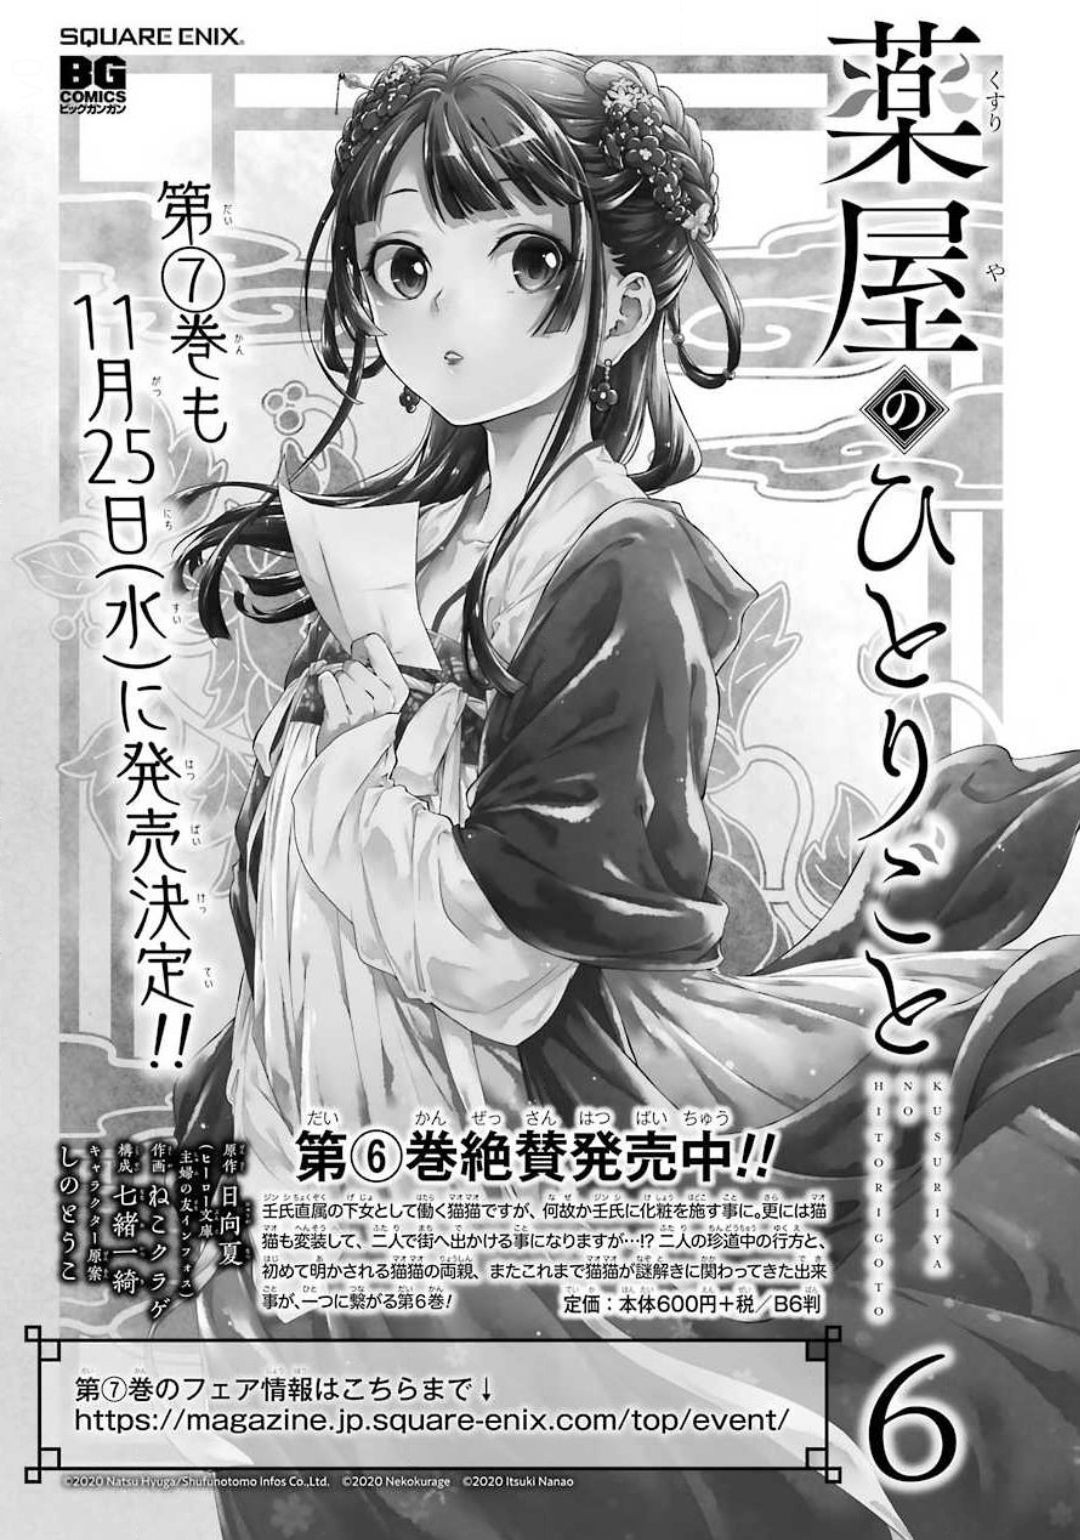 Kusuriya no Hitorigoto - Chapter 36-3 - Page 1